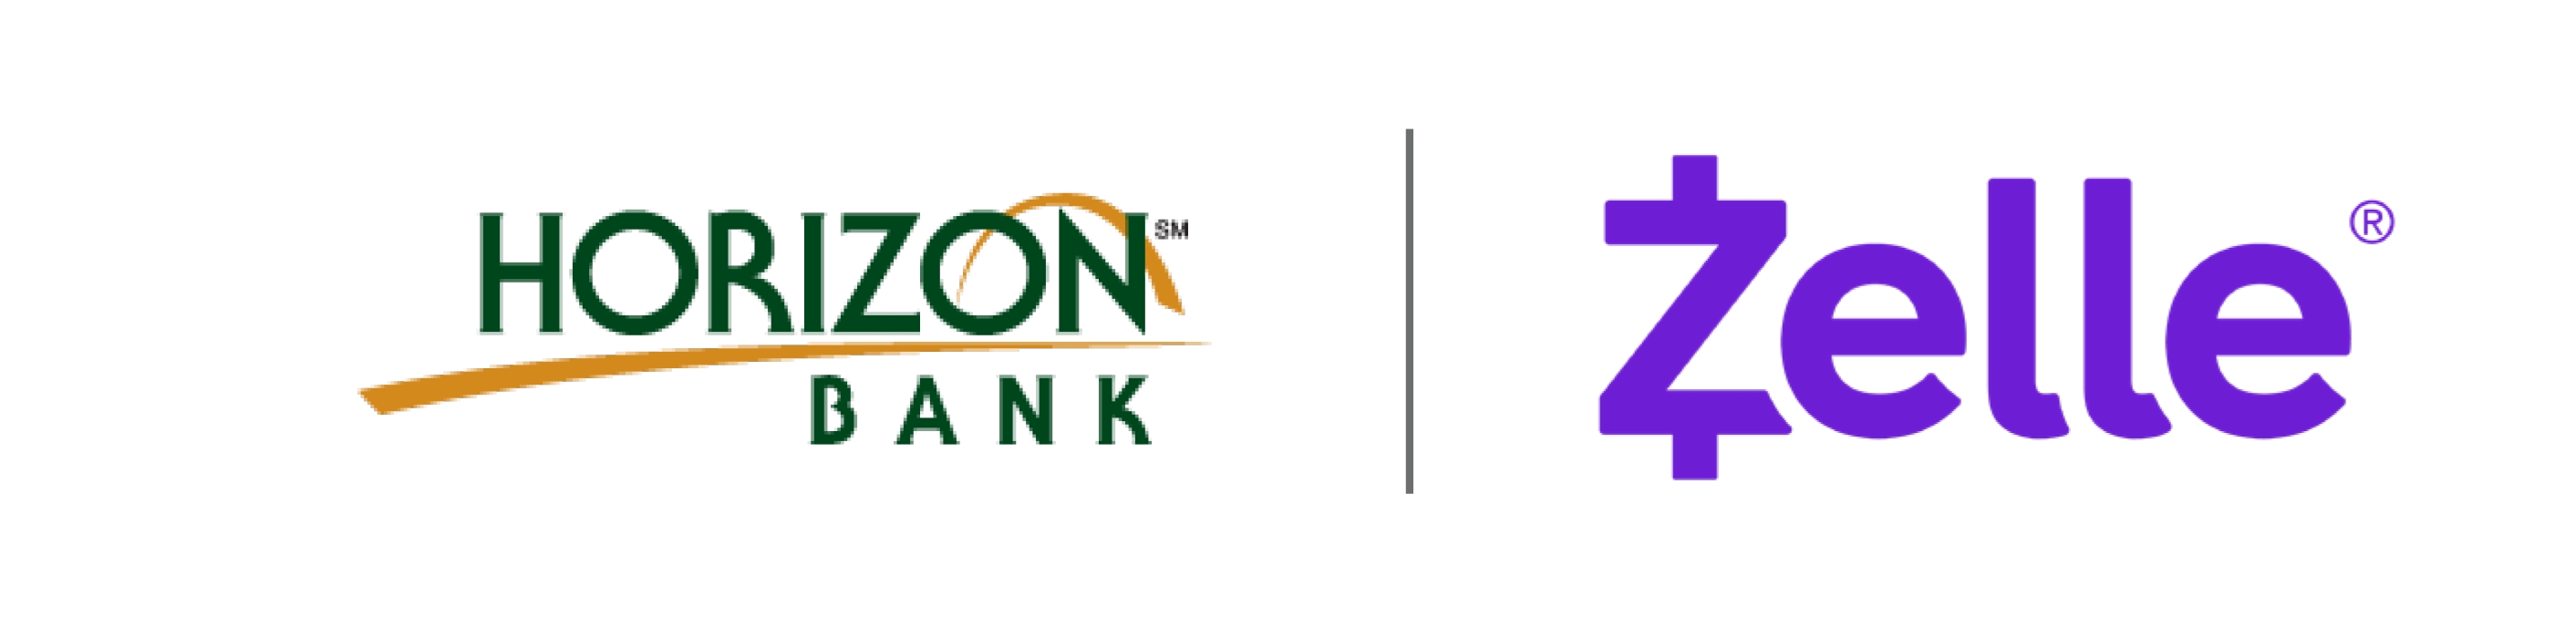 Horizon Bank and Zelle logos